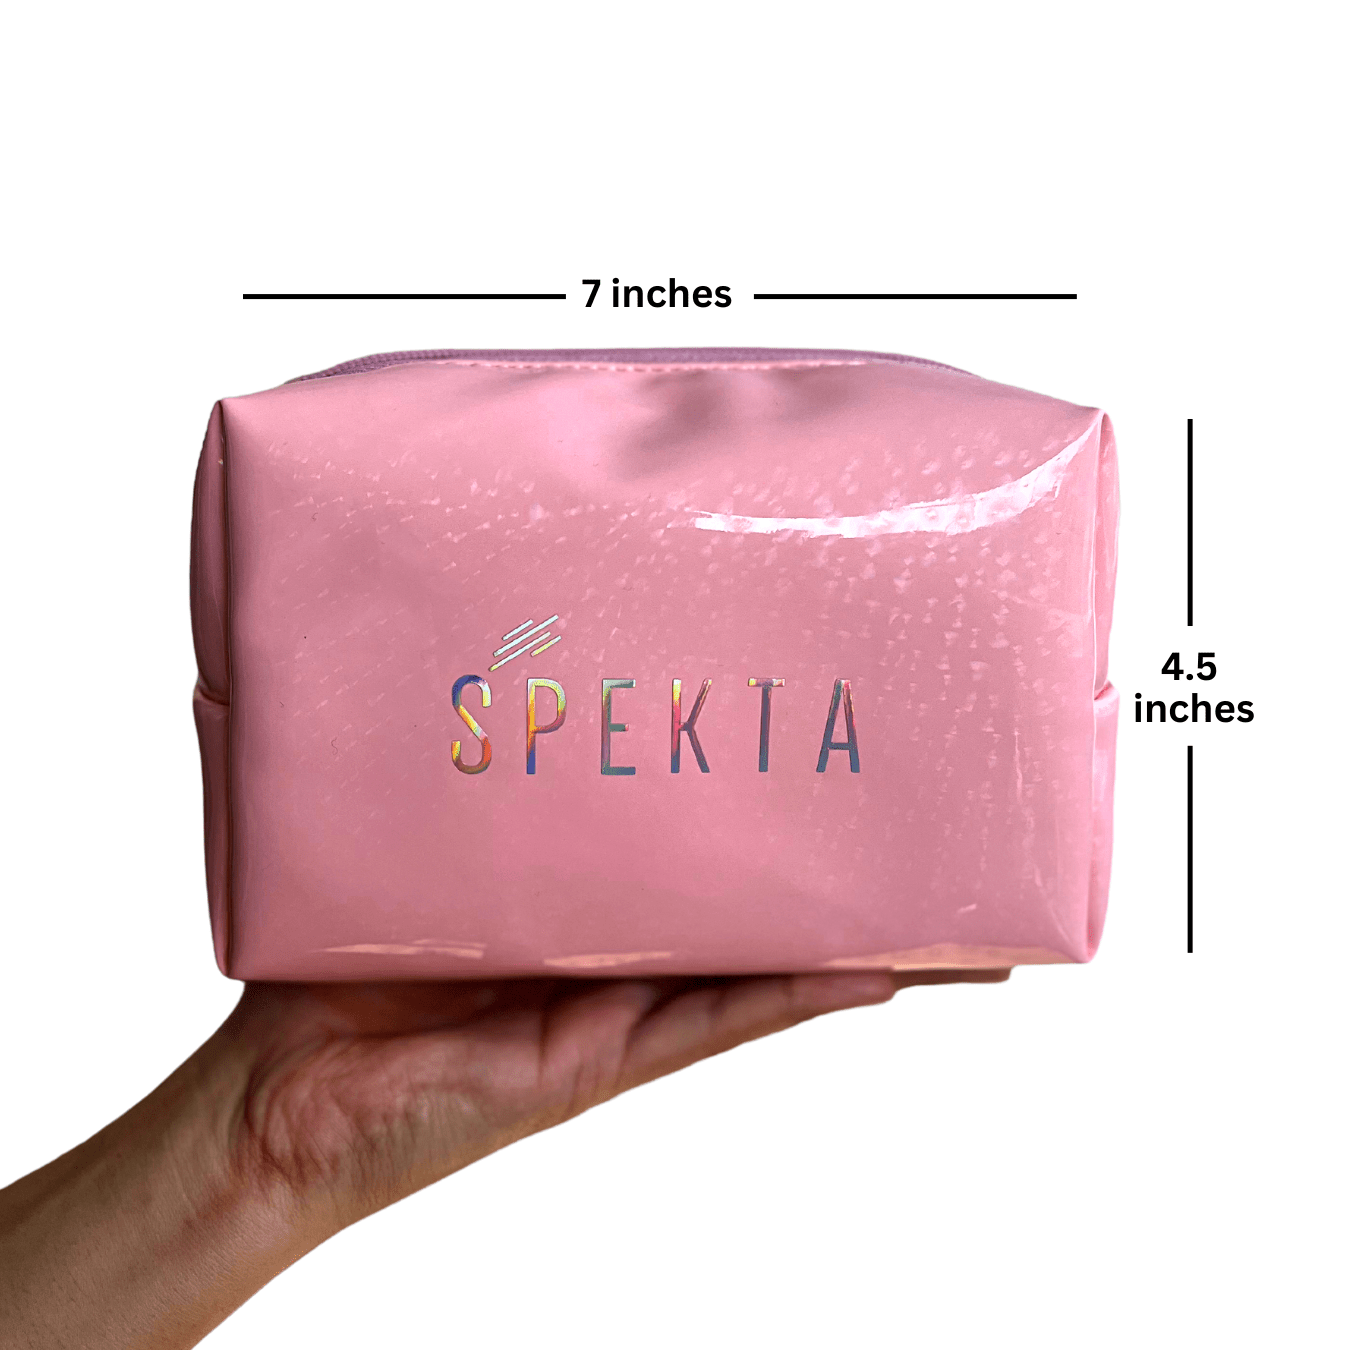 Spekta Essentials Nude Makeup Kit for Women - All in one Bag (5 pcs) - Spekta Cosmetics